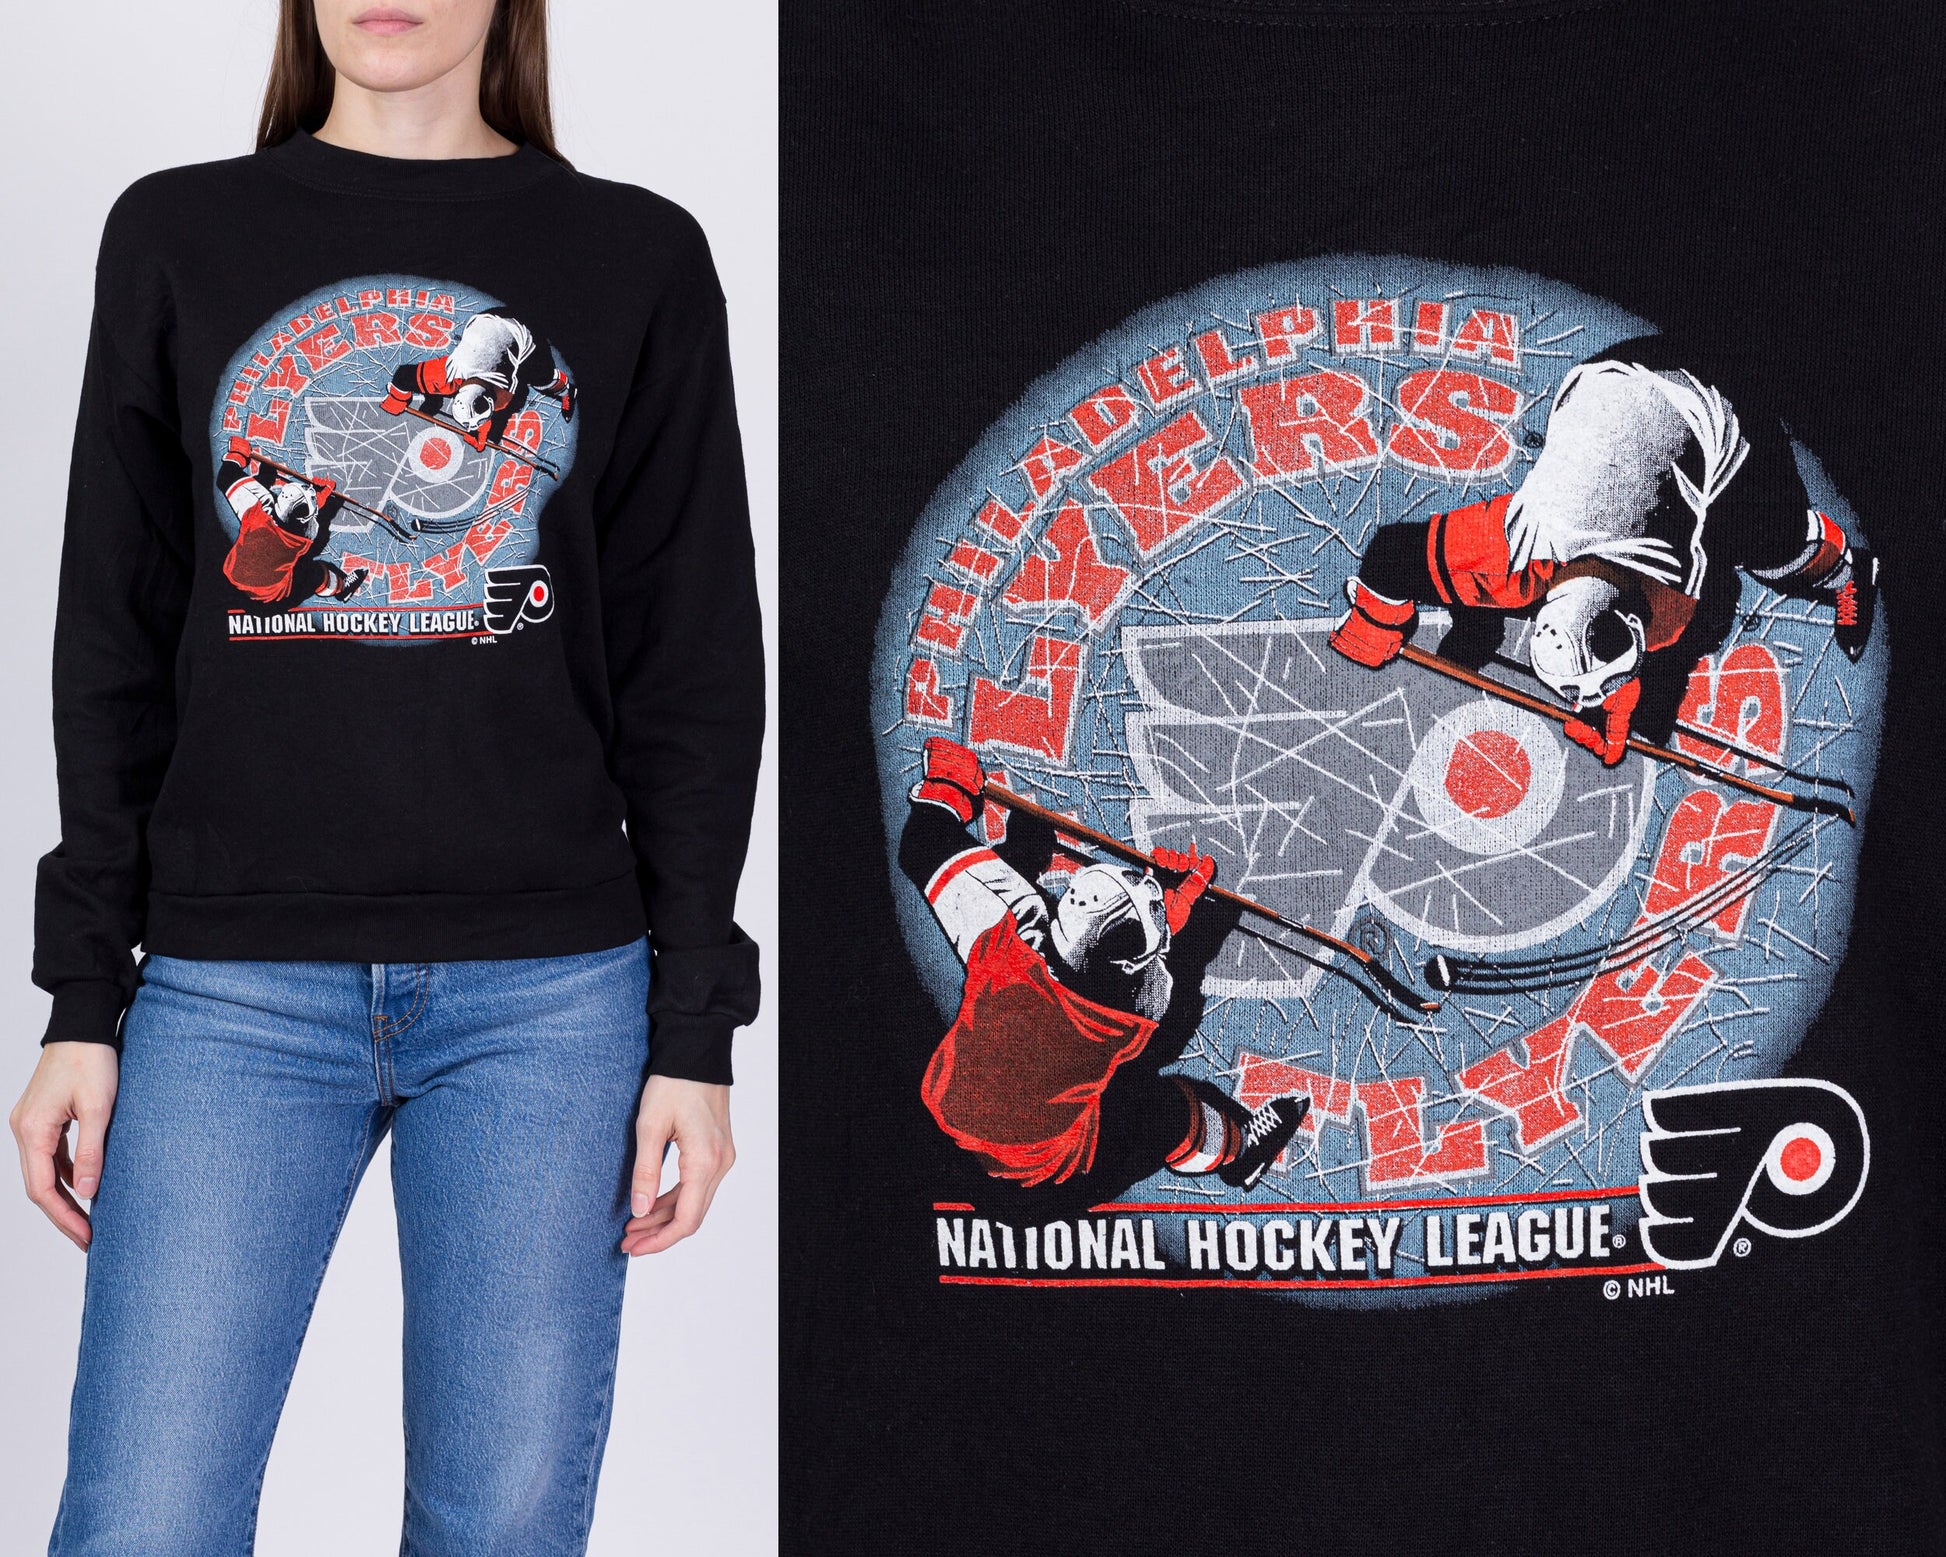 90s Philadelphia Flyers NHL Hockey Team t-shirt Large - The